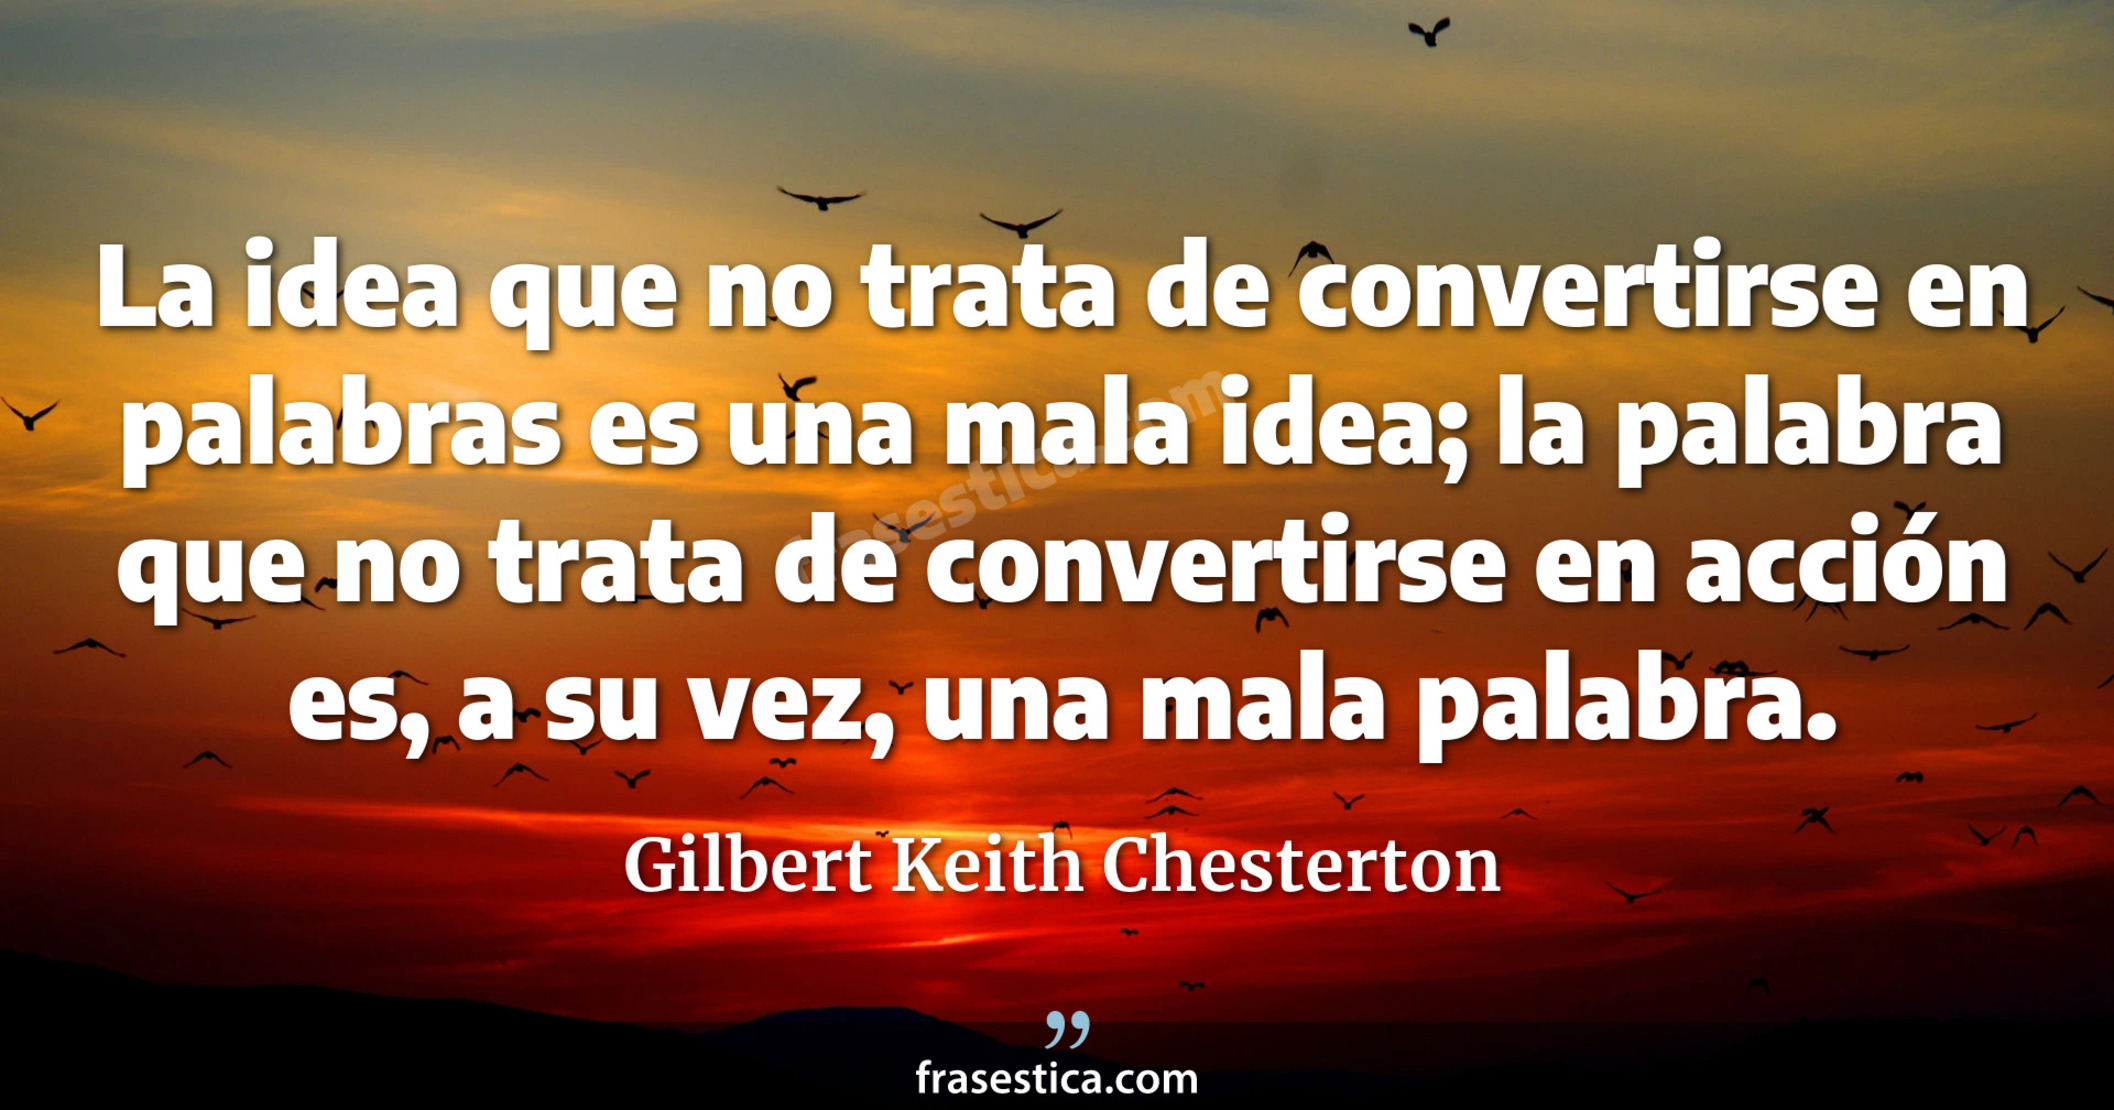 La idea que no trata de convertirse en palabras es una mala idea; la palabra que no trata de convertirse en acción es, a su vez, una mala palabra. - Gilbert Keith Chesterton